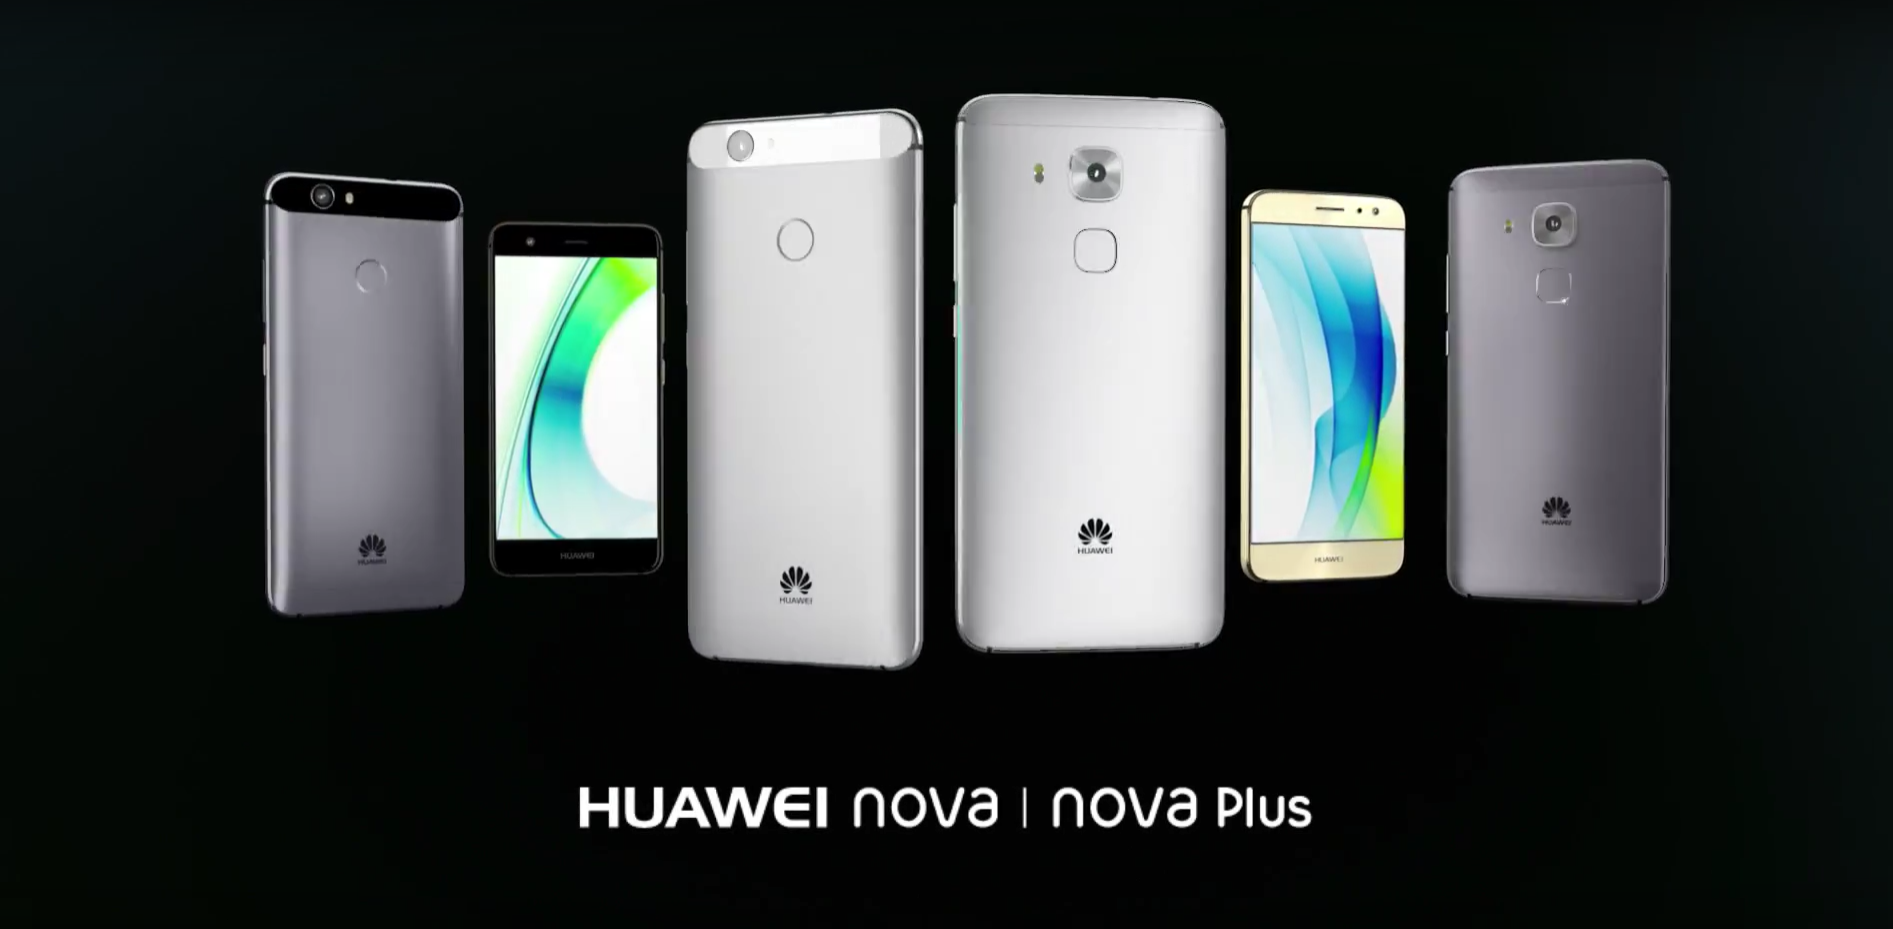 huawei nova plus | Official | Huawei เปิดตัว Nova, Nova Plus และ MediaPad M3 ในงาน IFA 2016 ที่ผ่านมา